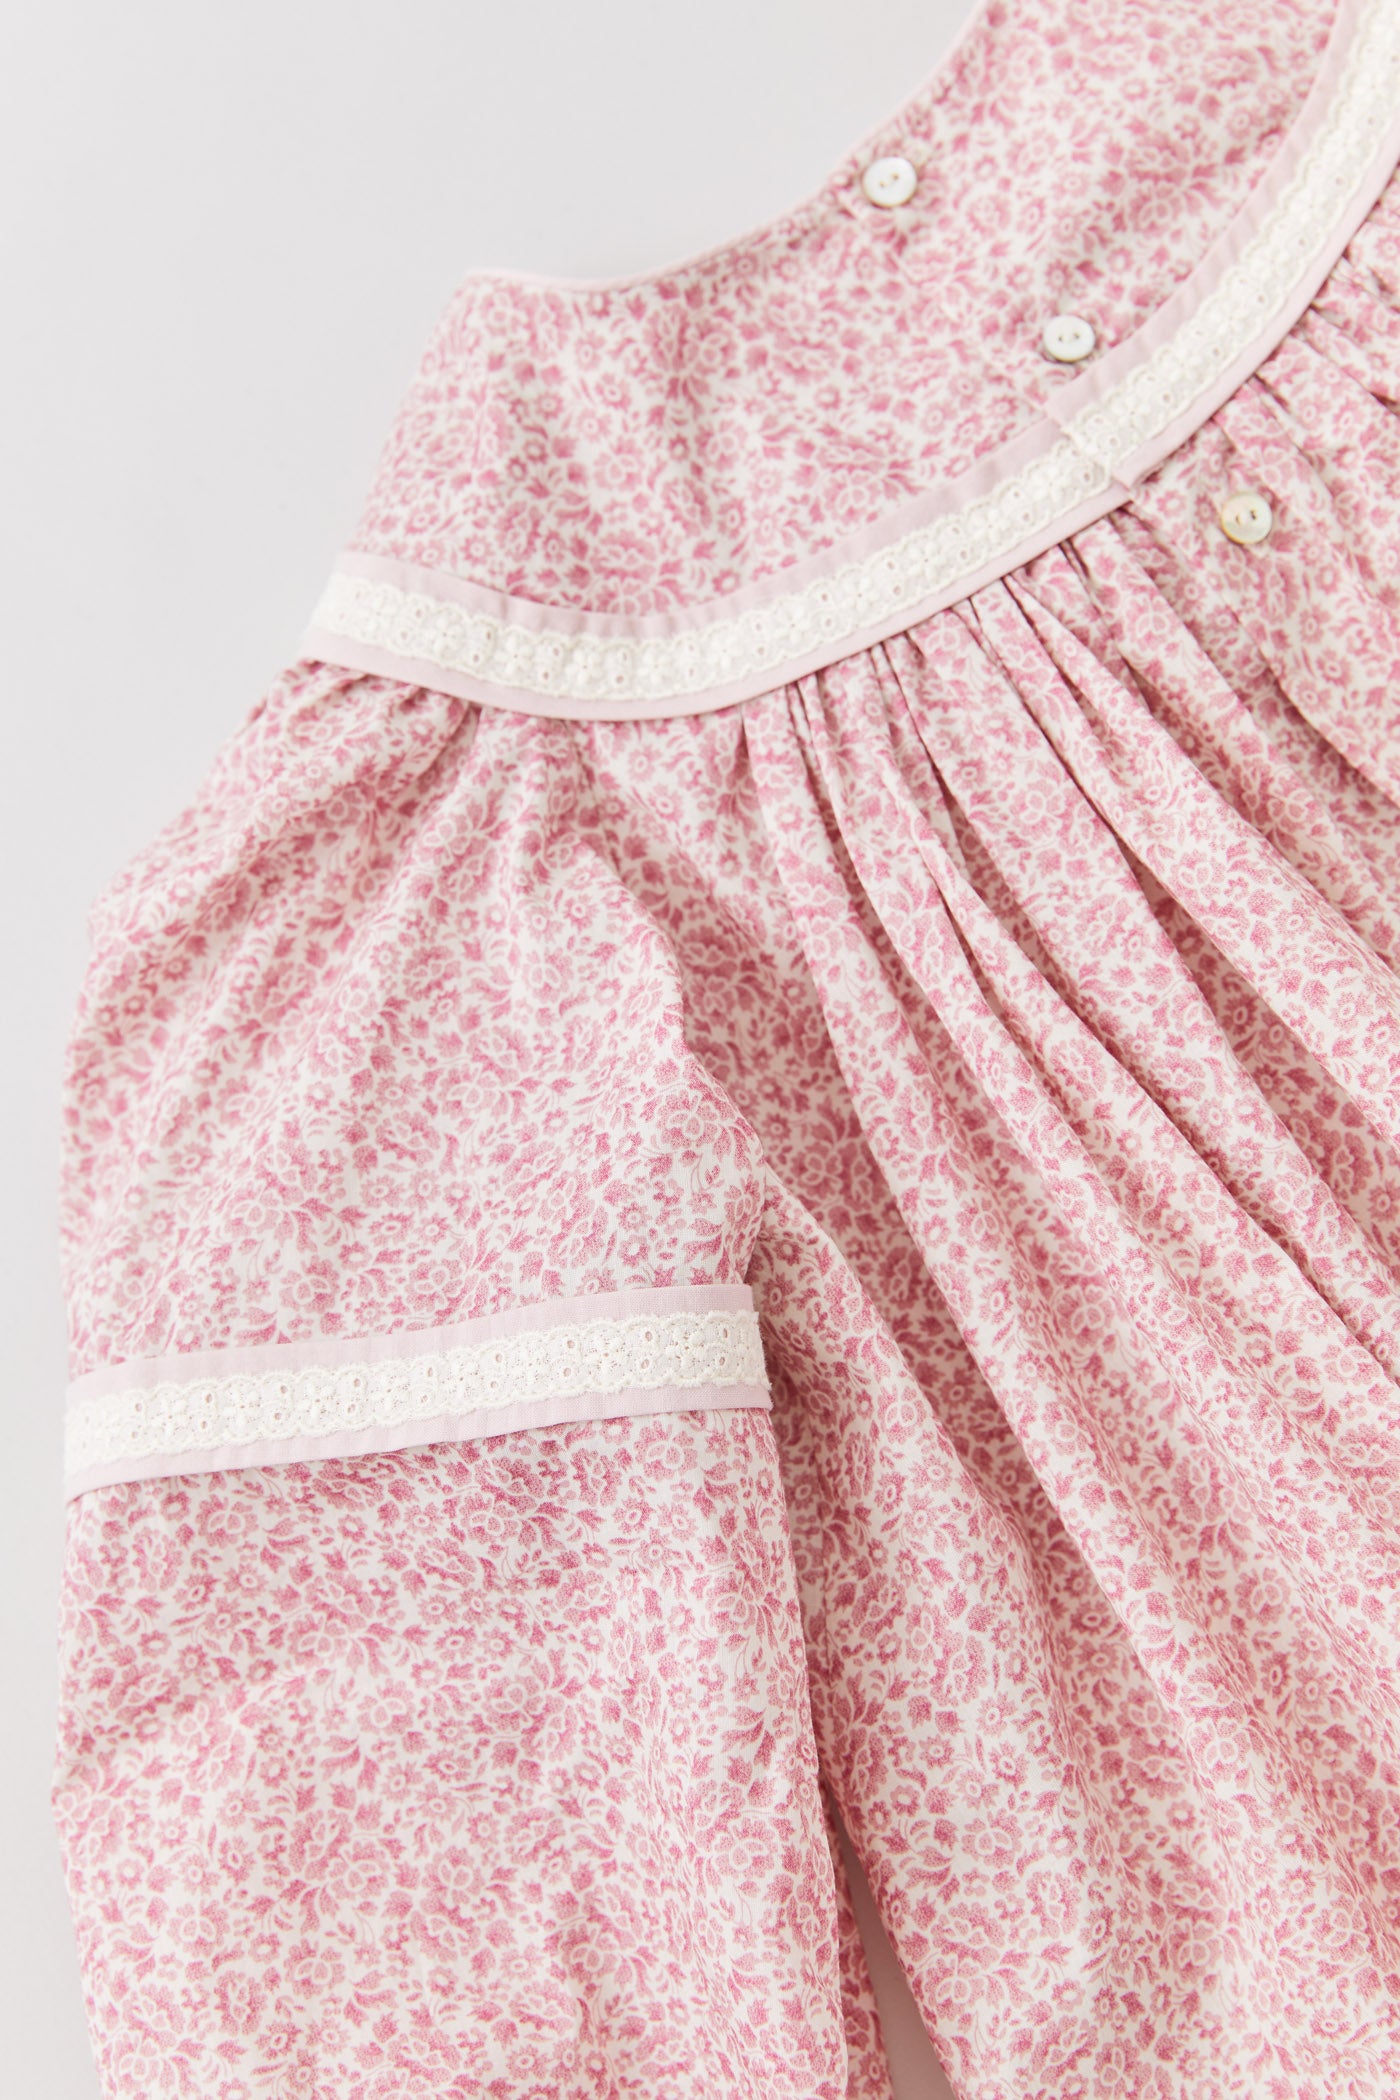 Plumcake Long Sleeve Dress in Mini Floral Print Liberty - Designed by Ingrid Lewis - Strawberries & Cream